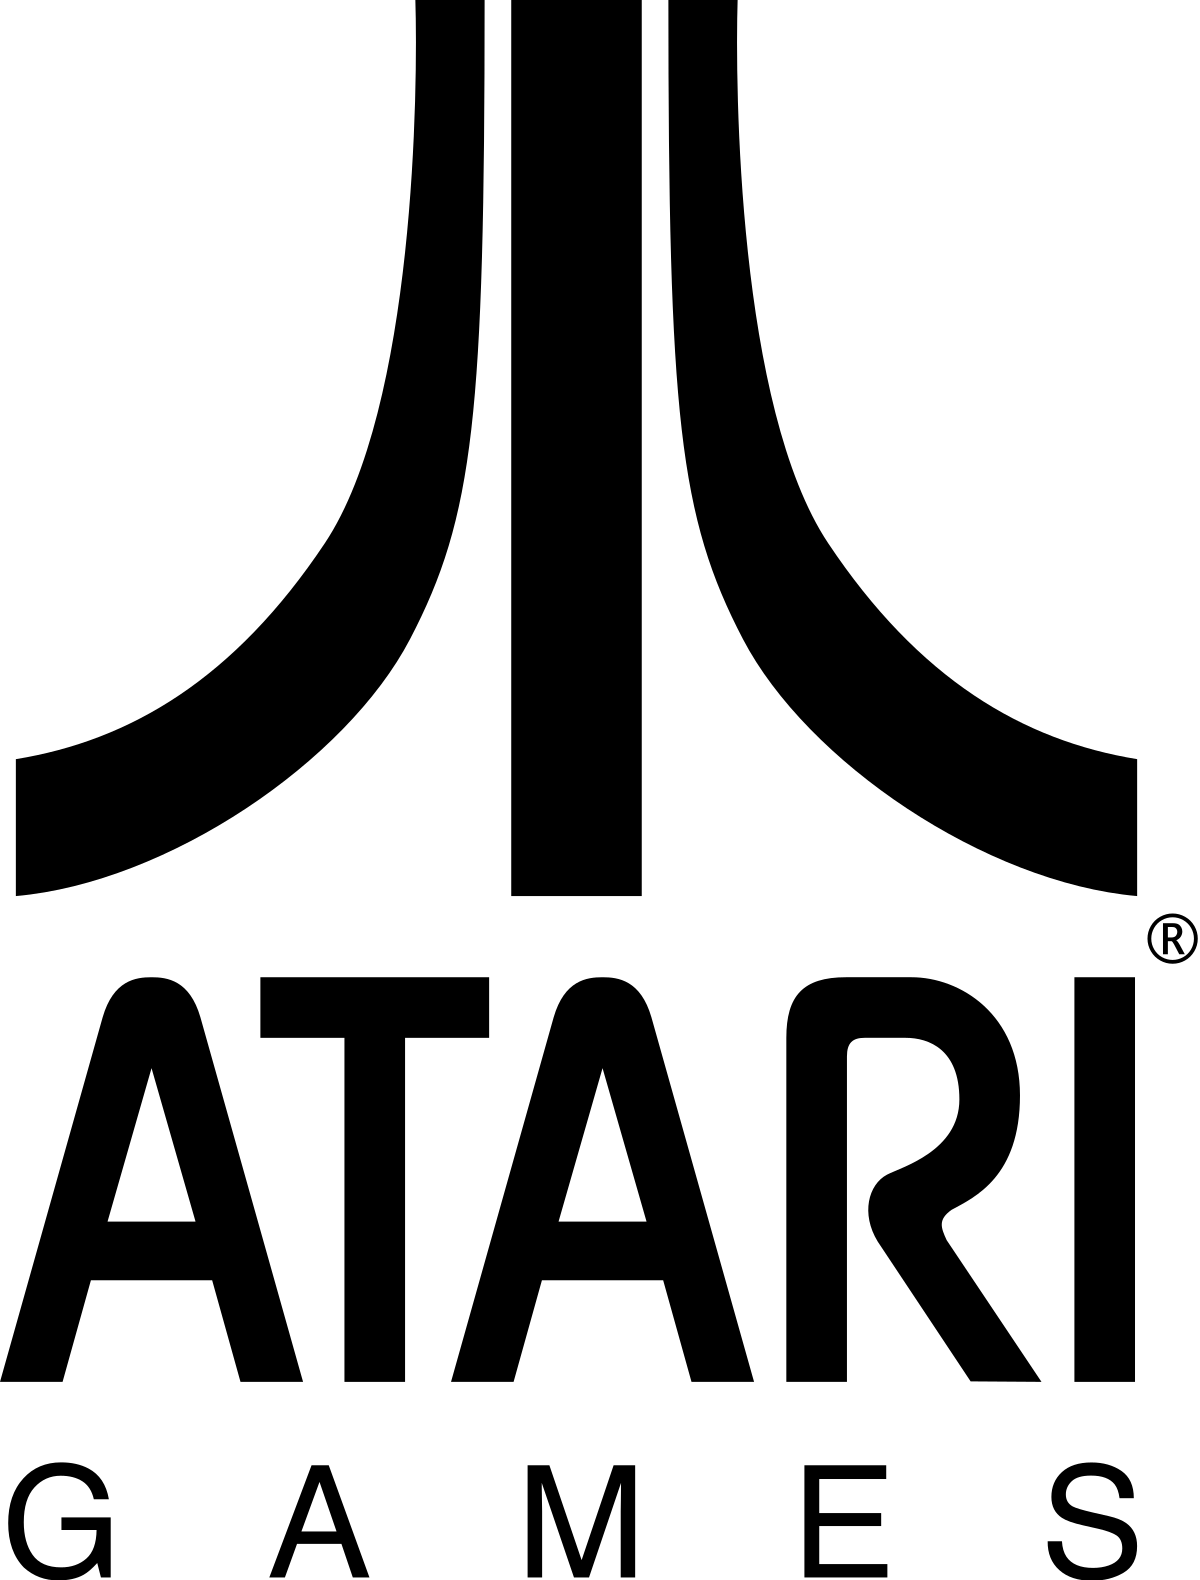 All Game Logo - Atari Games